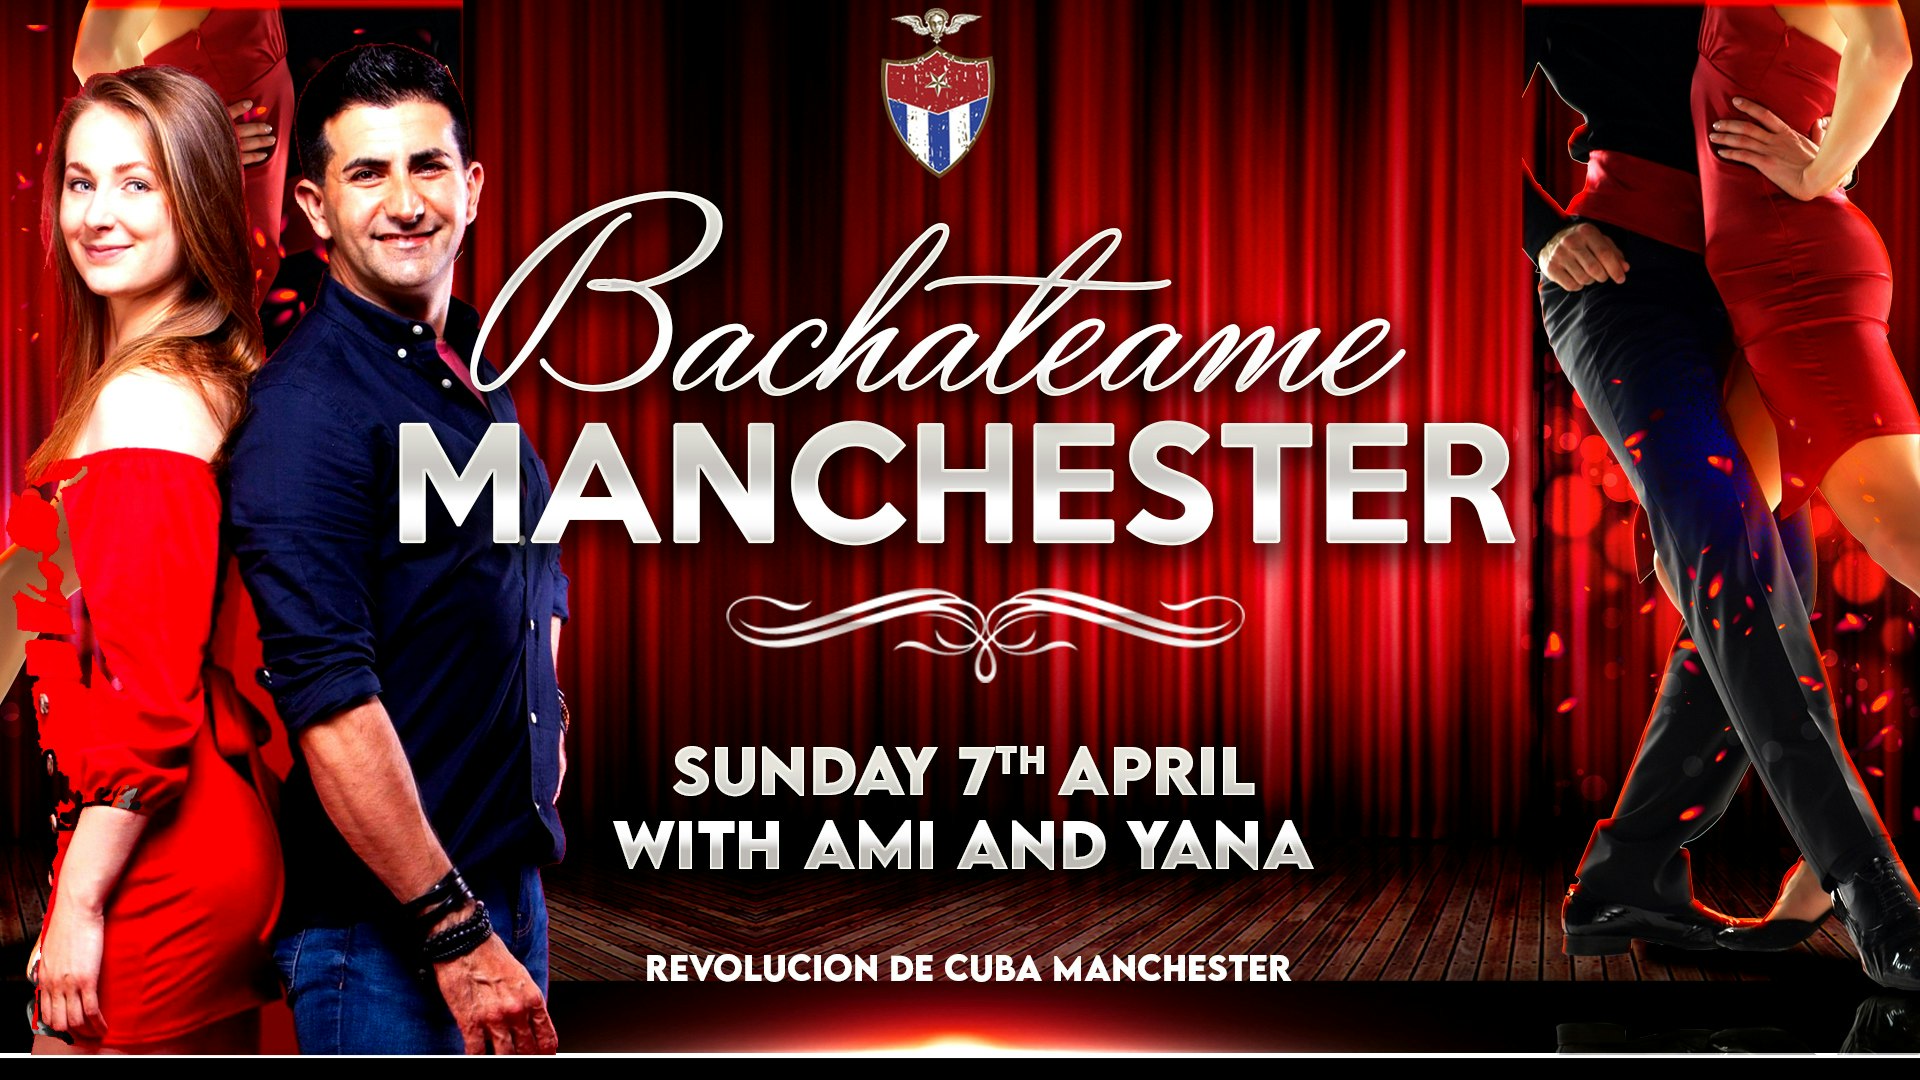 Bachateame Manchester – Sunday 7th April | Revolucion De Cuba